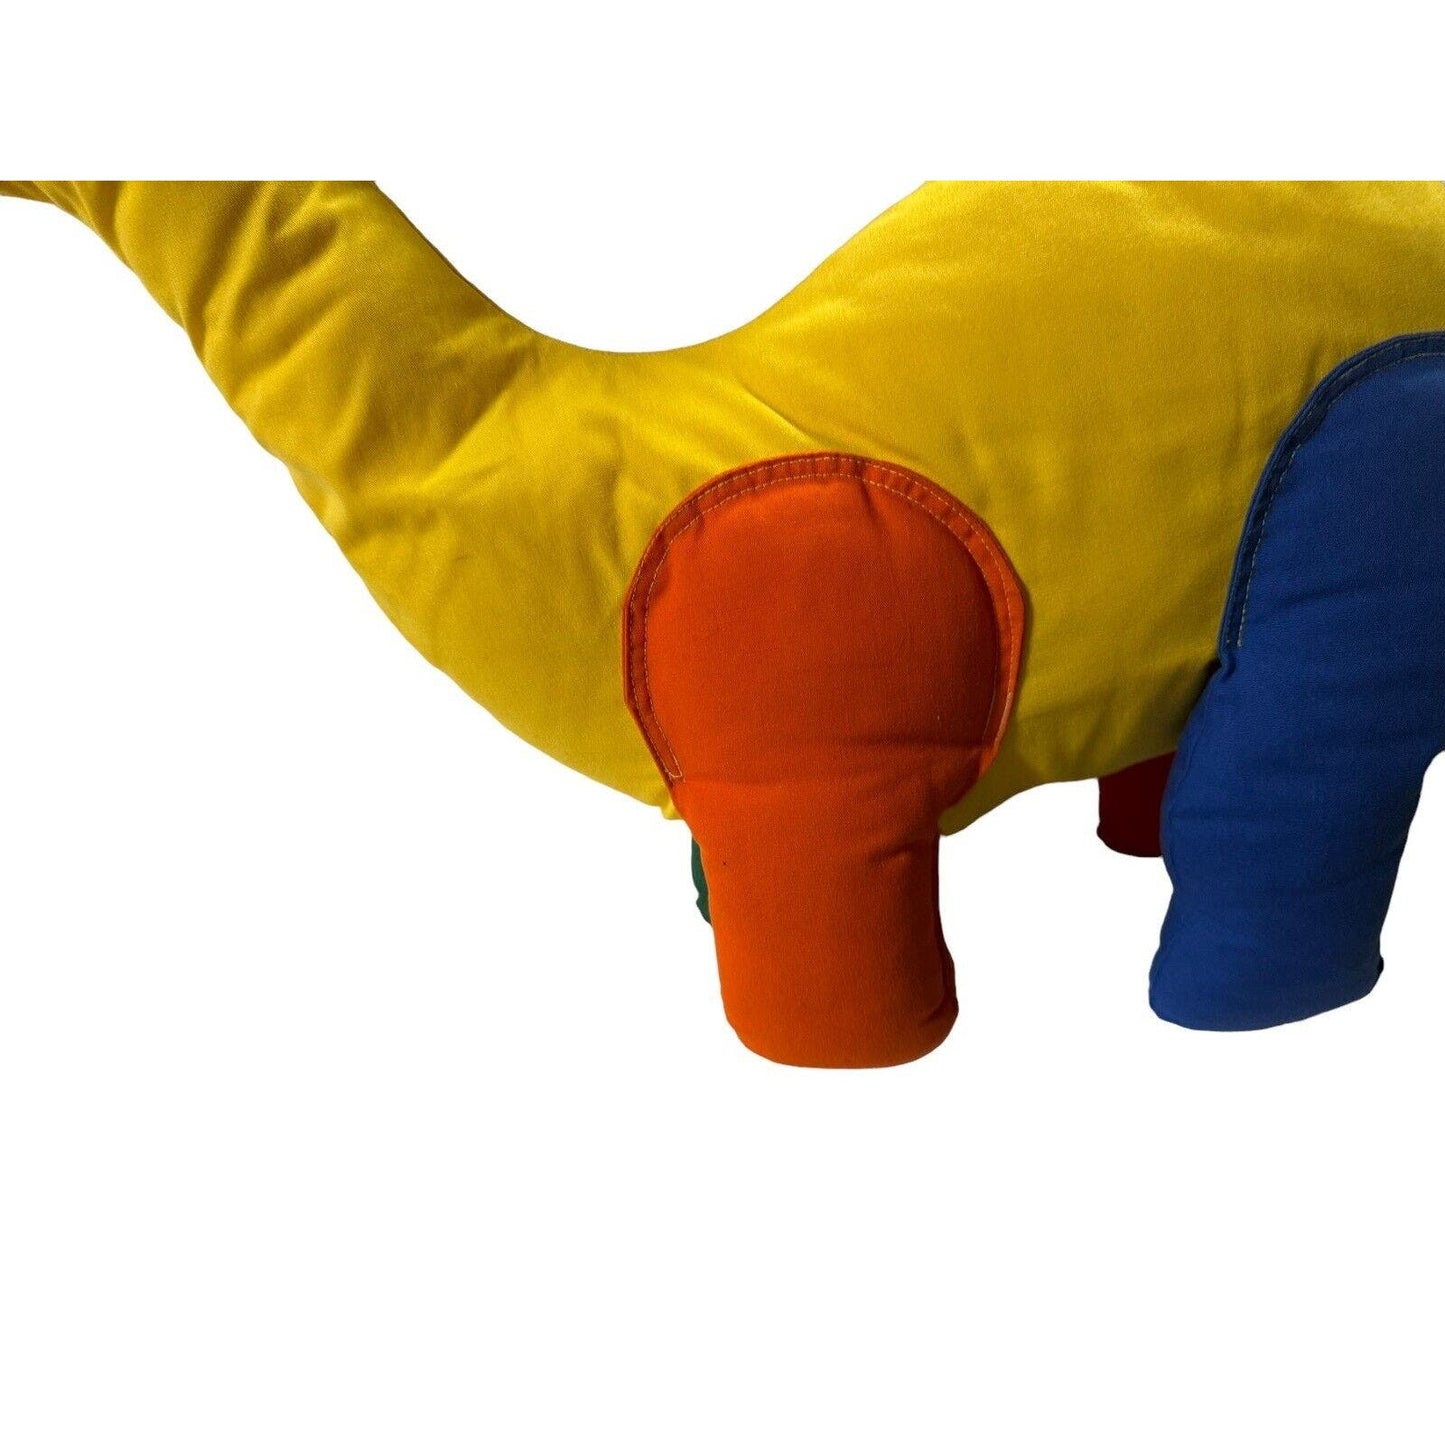 Vintage Modal Color block 30” Dinosaur Stuffed Plush Toy Yellow